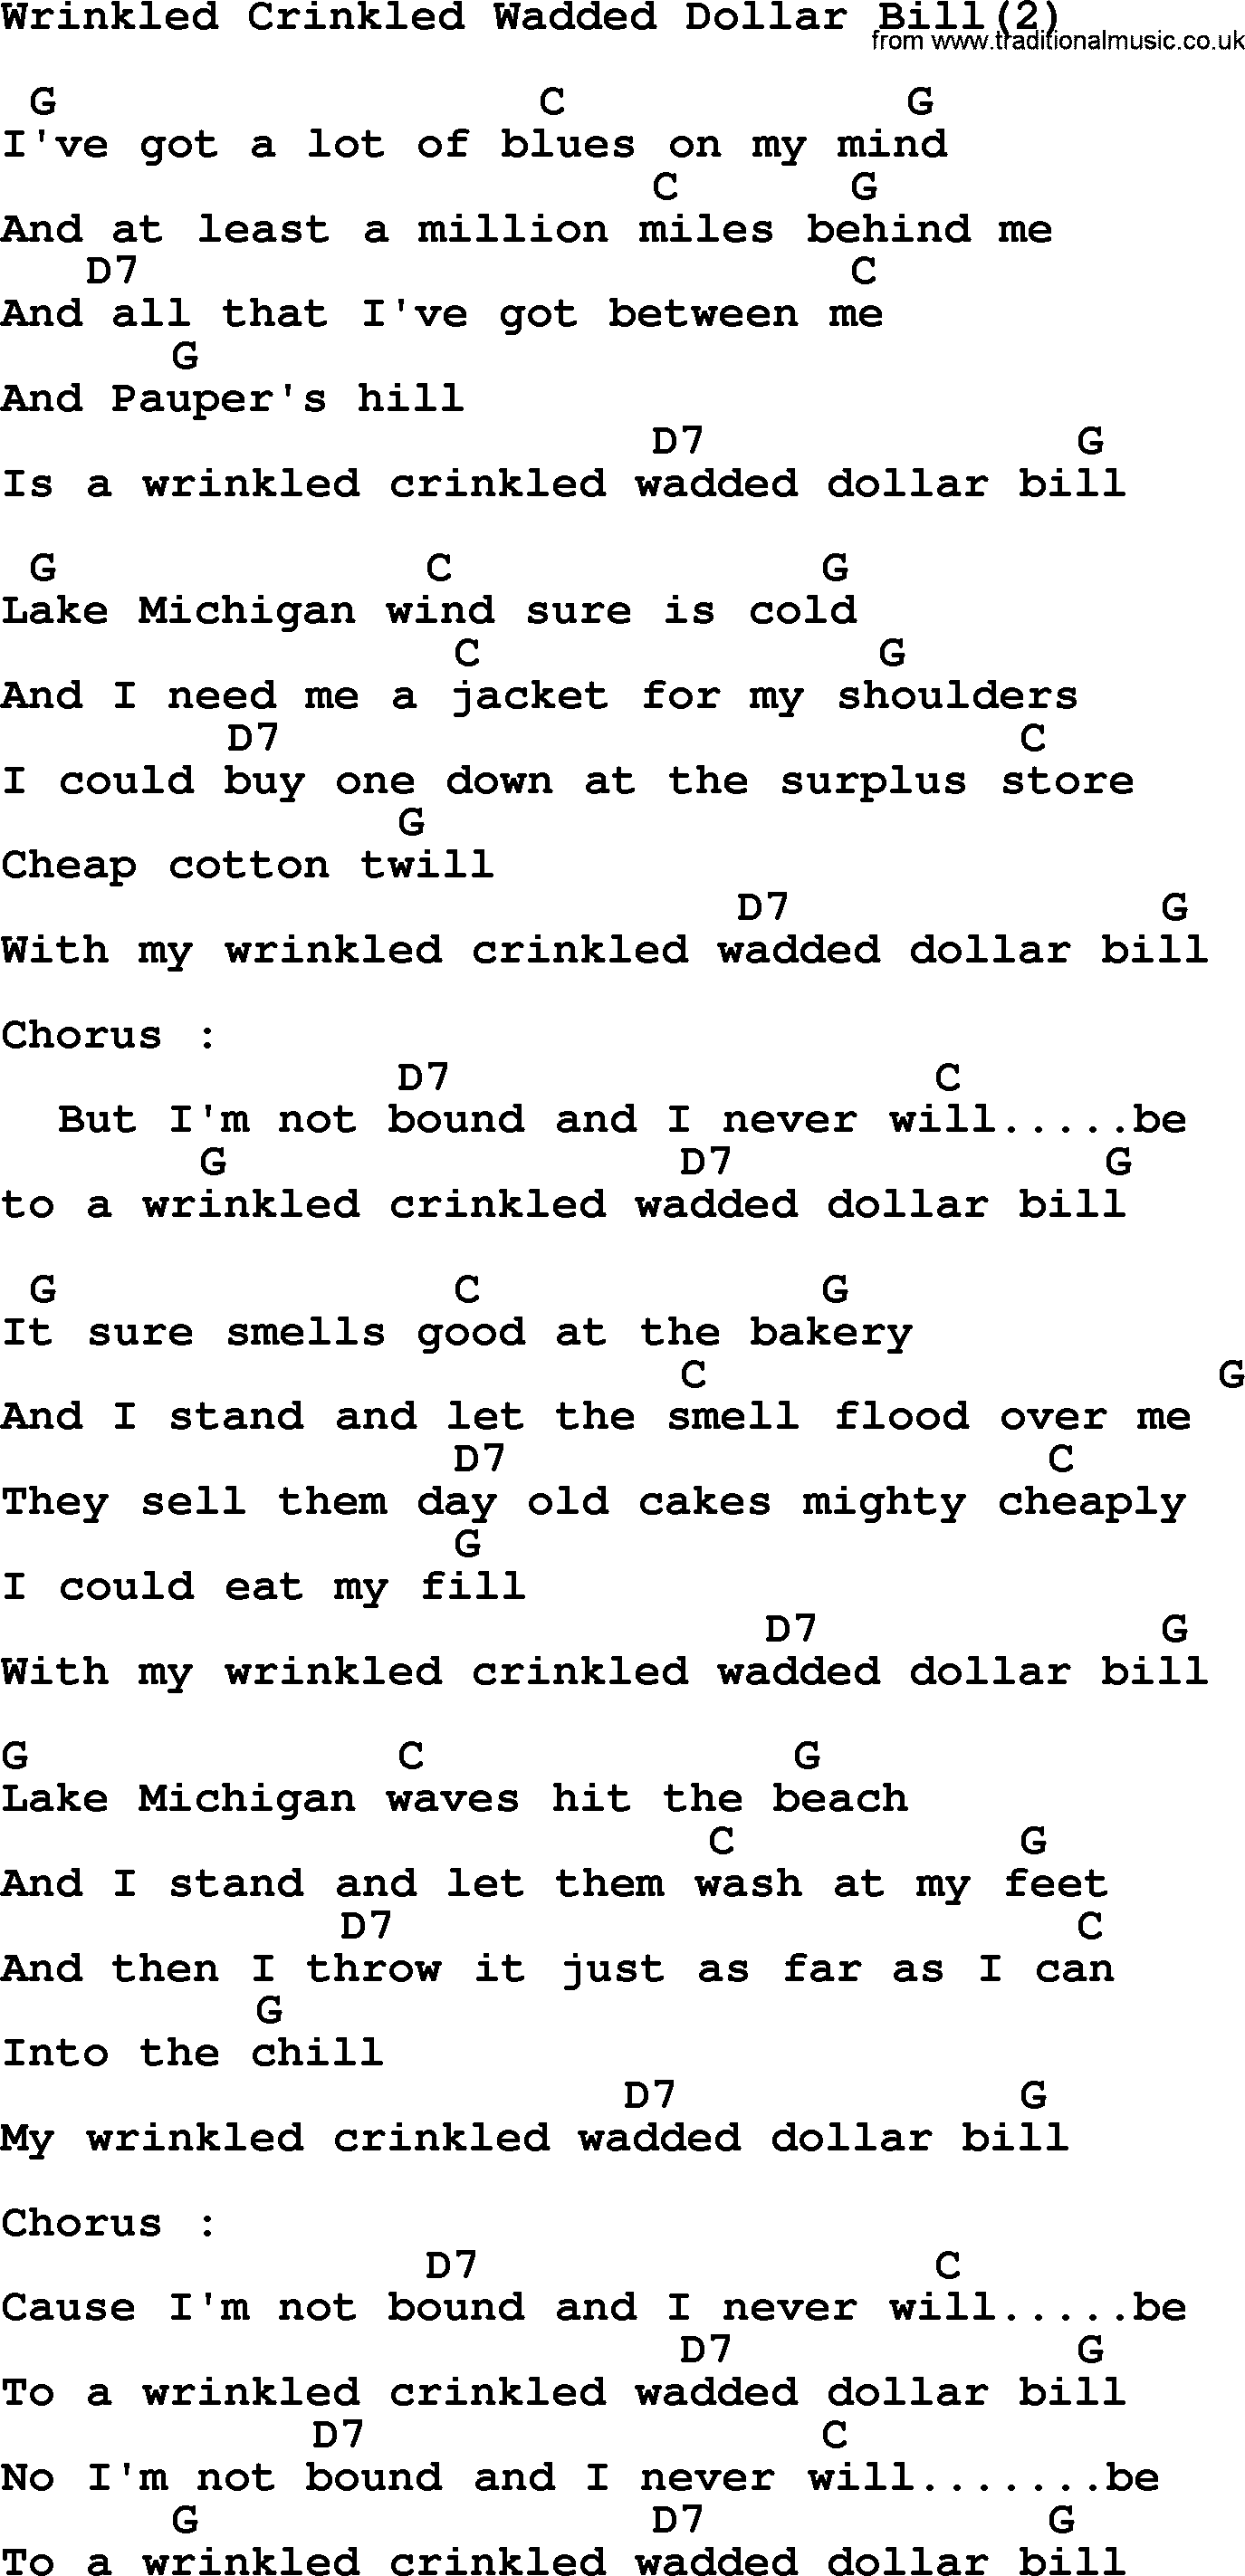 Johnny Cash song Wrinkled Crinkled Wadded Dollar Bill(2), lyrics and chords